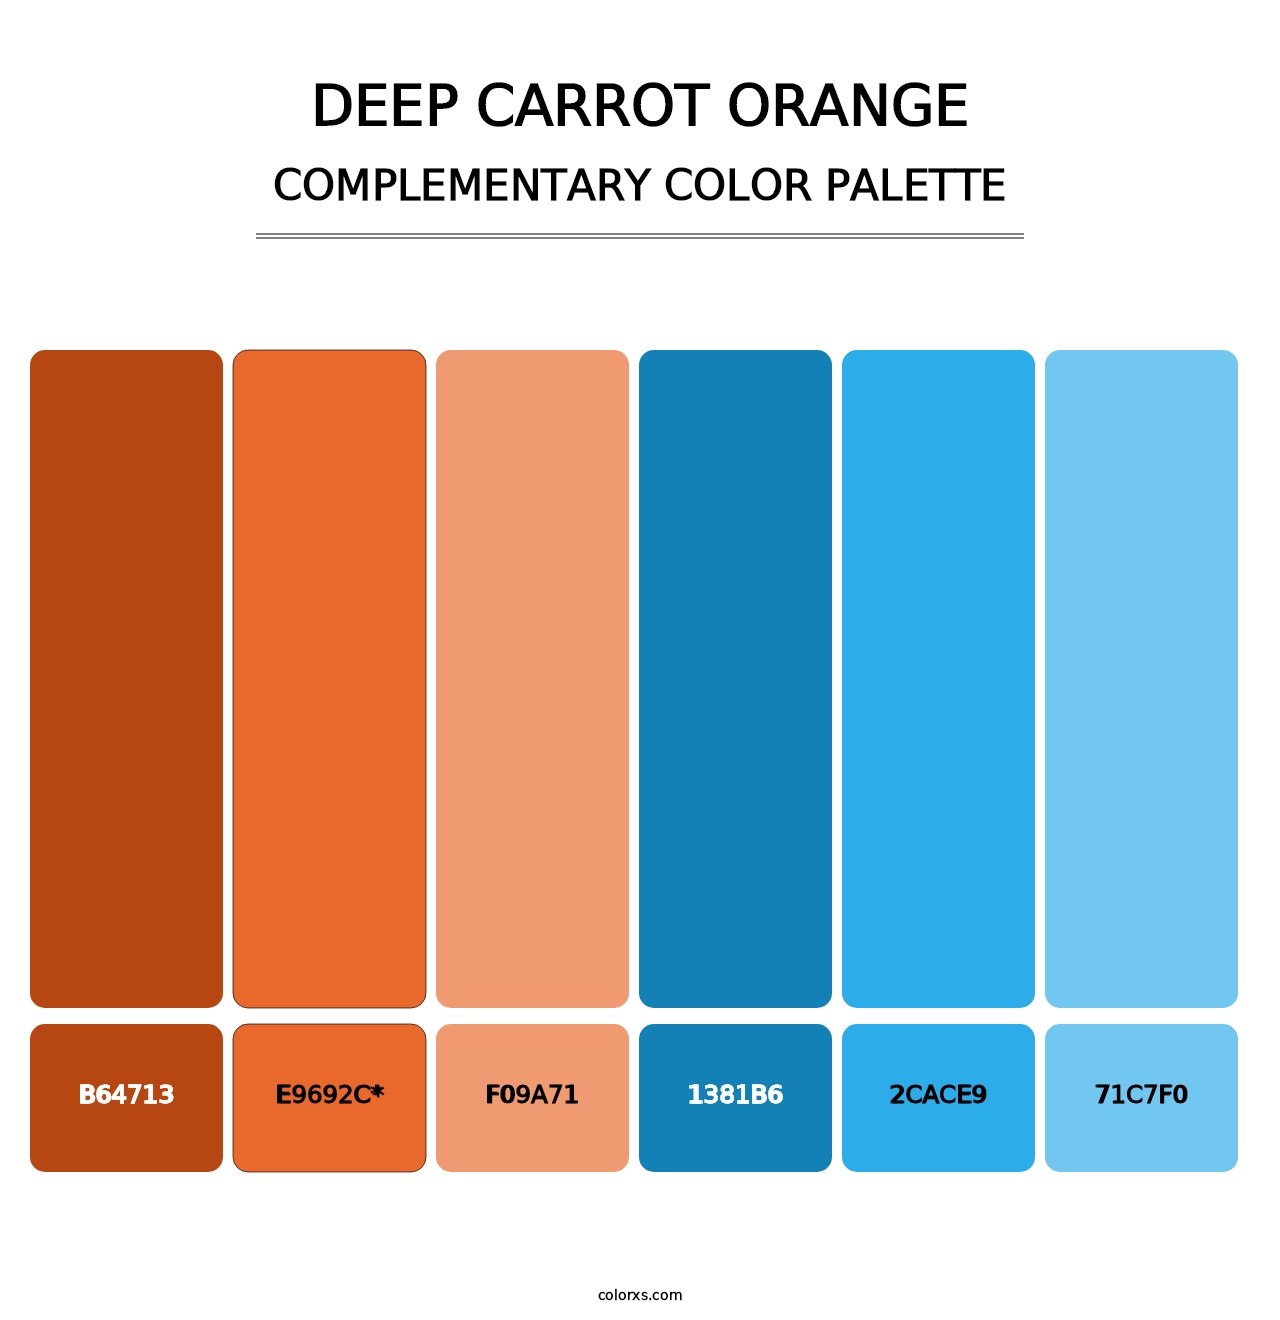 Deep Carrot Orange - Complementary Color Palette